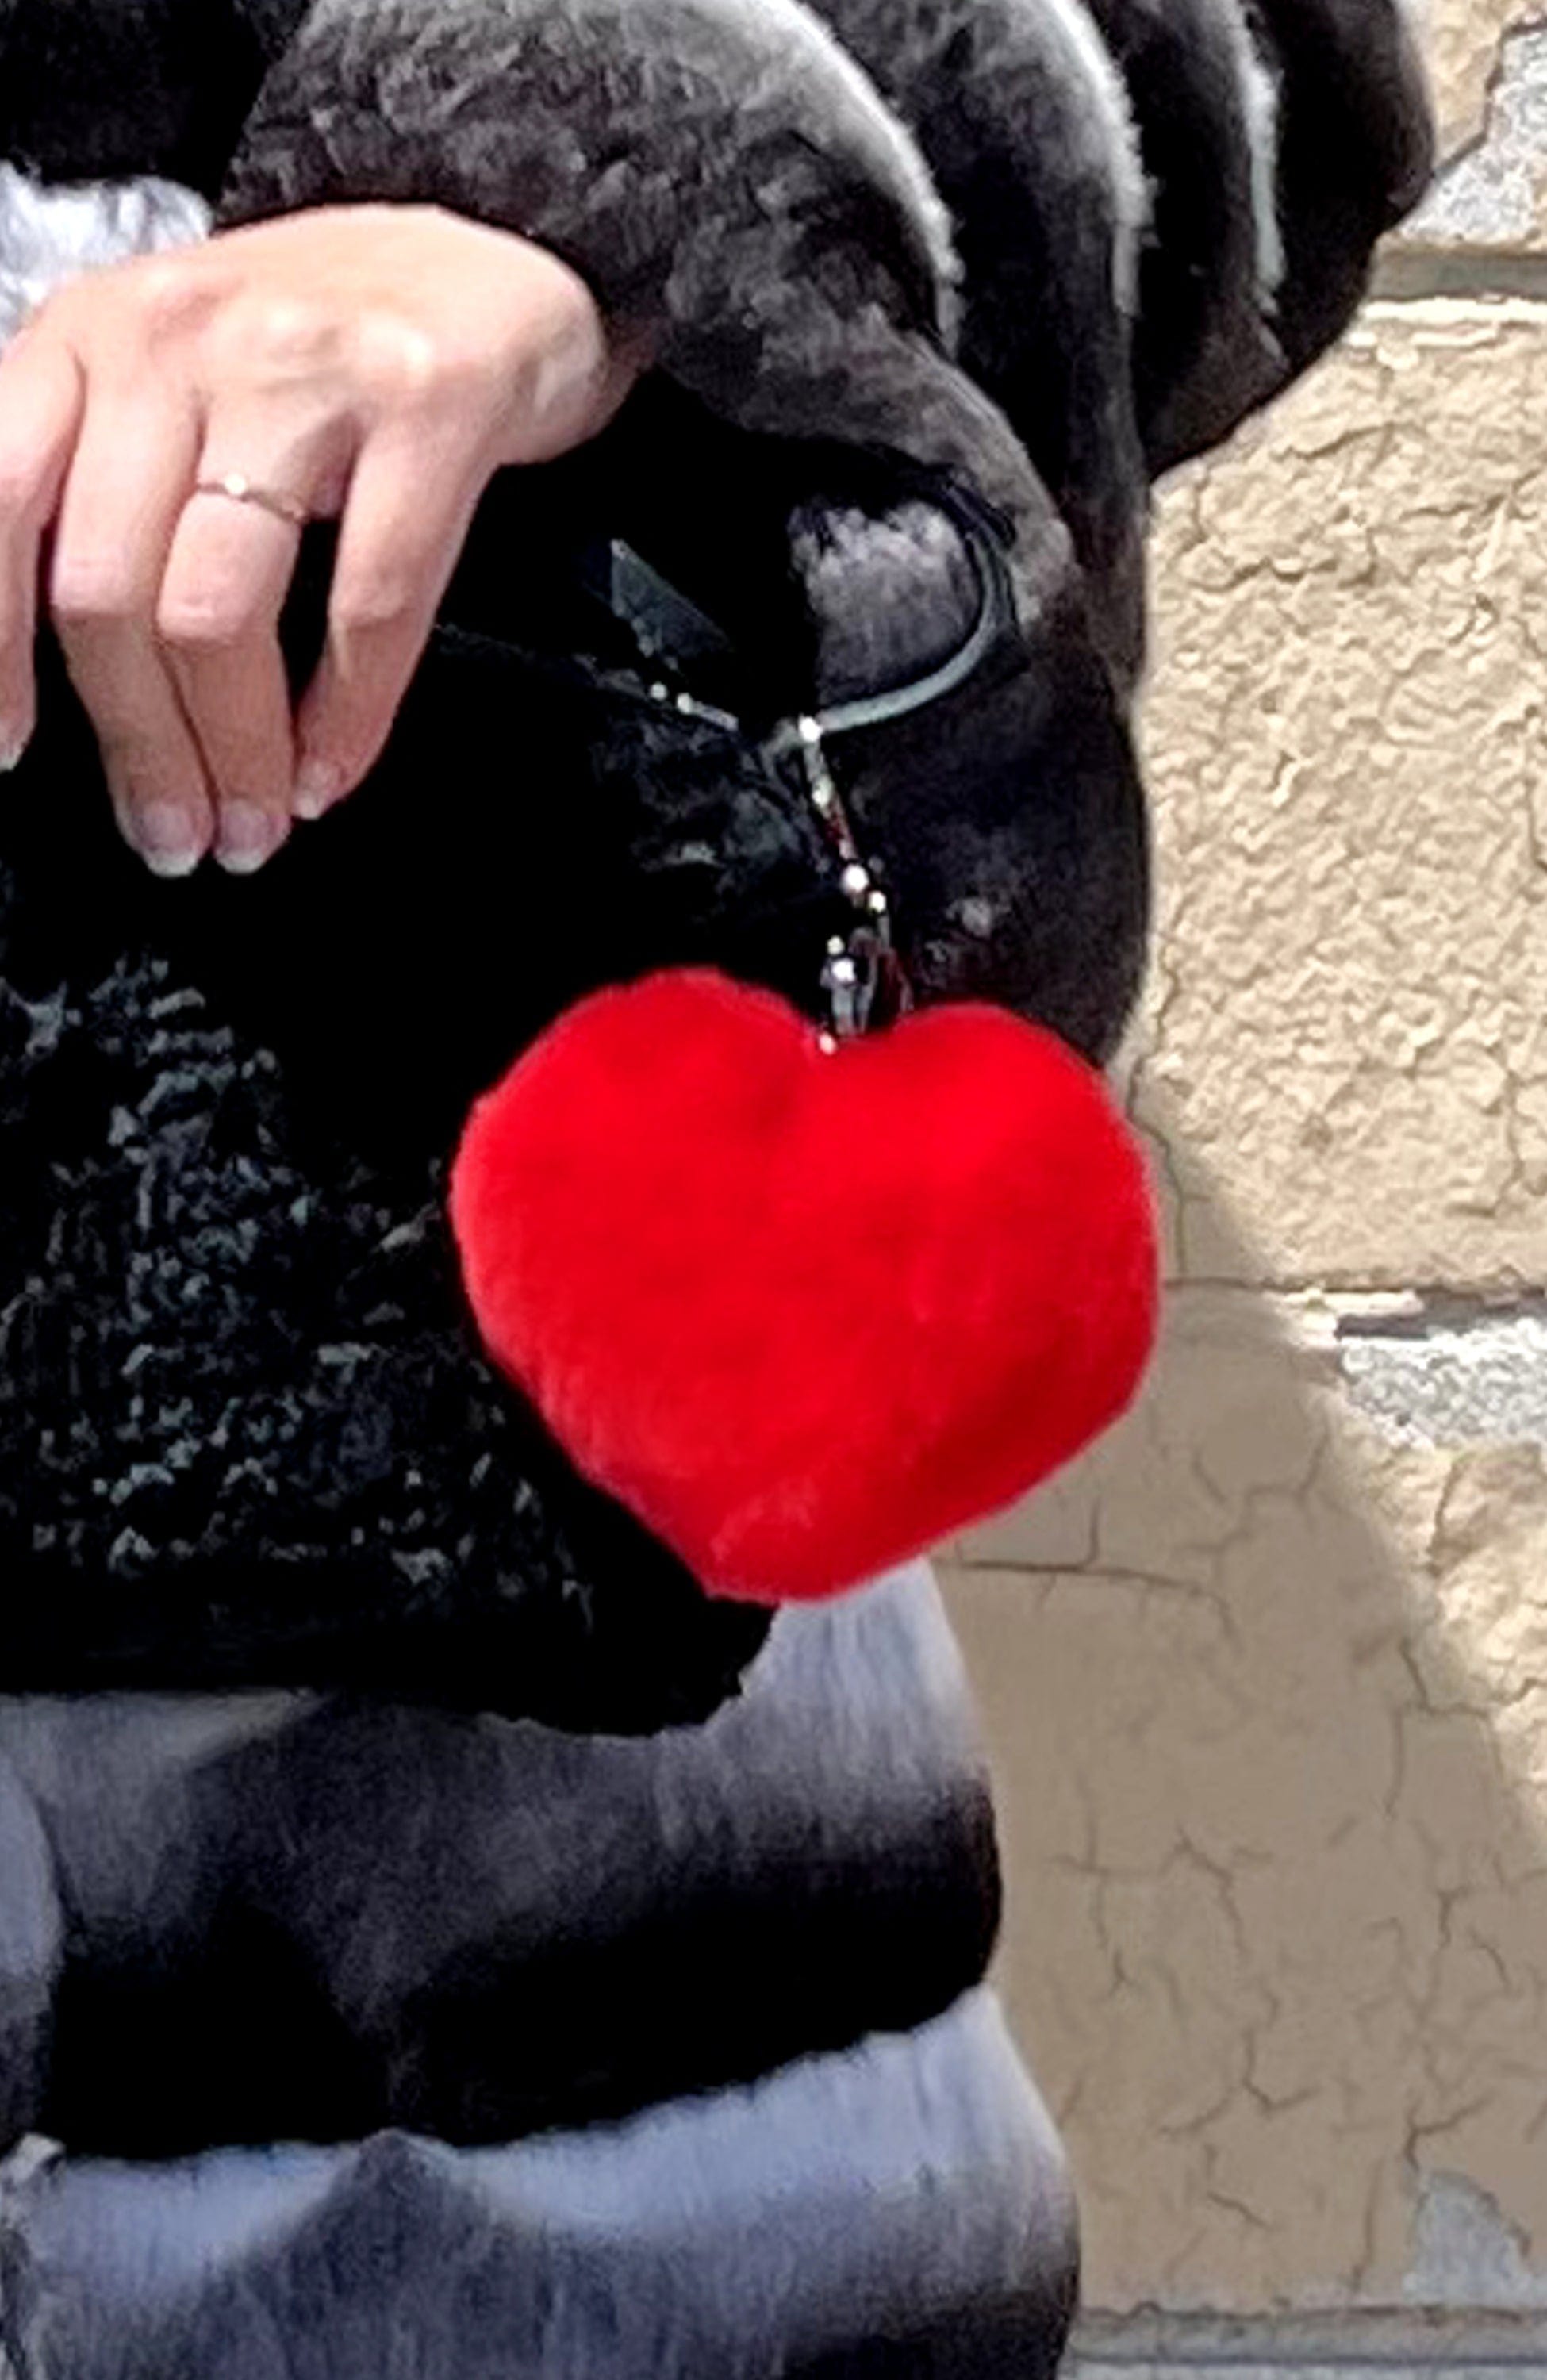 Heart Shaped Rabbit Fur Bag Charm